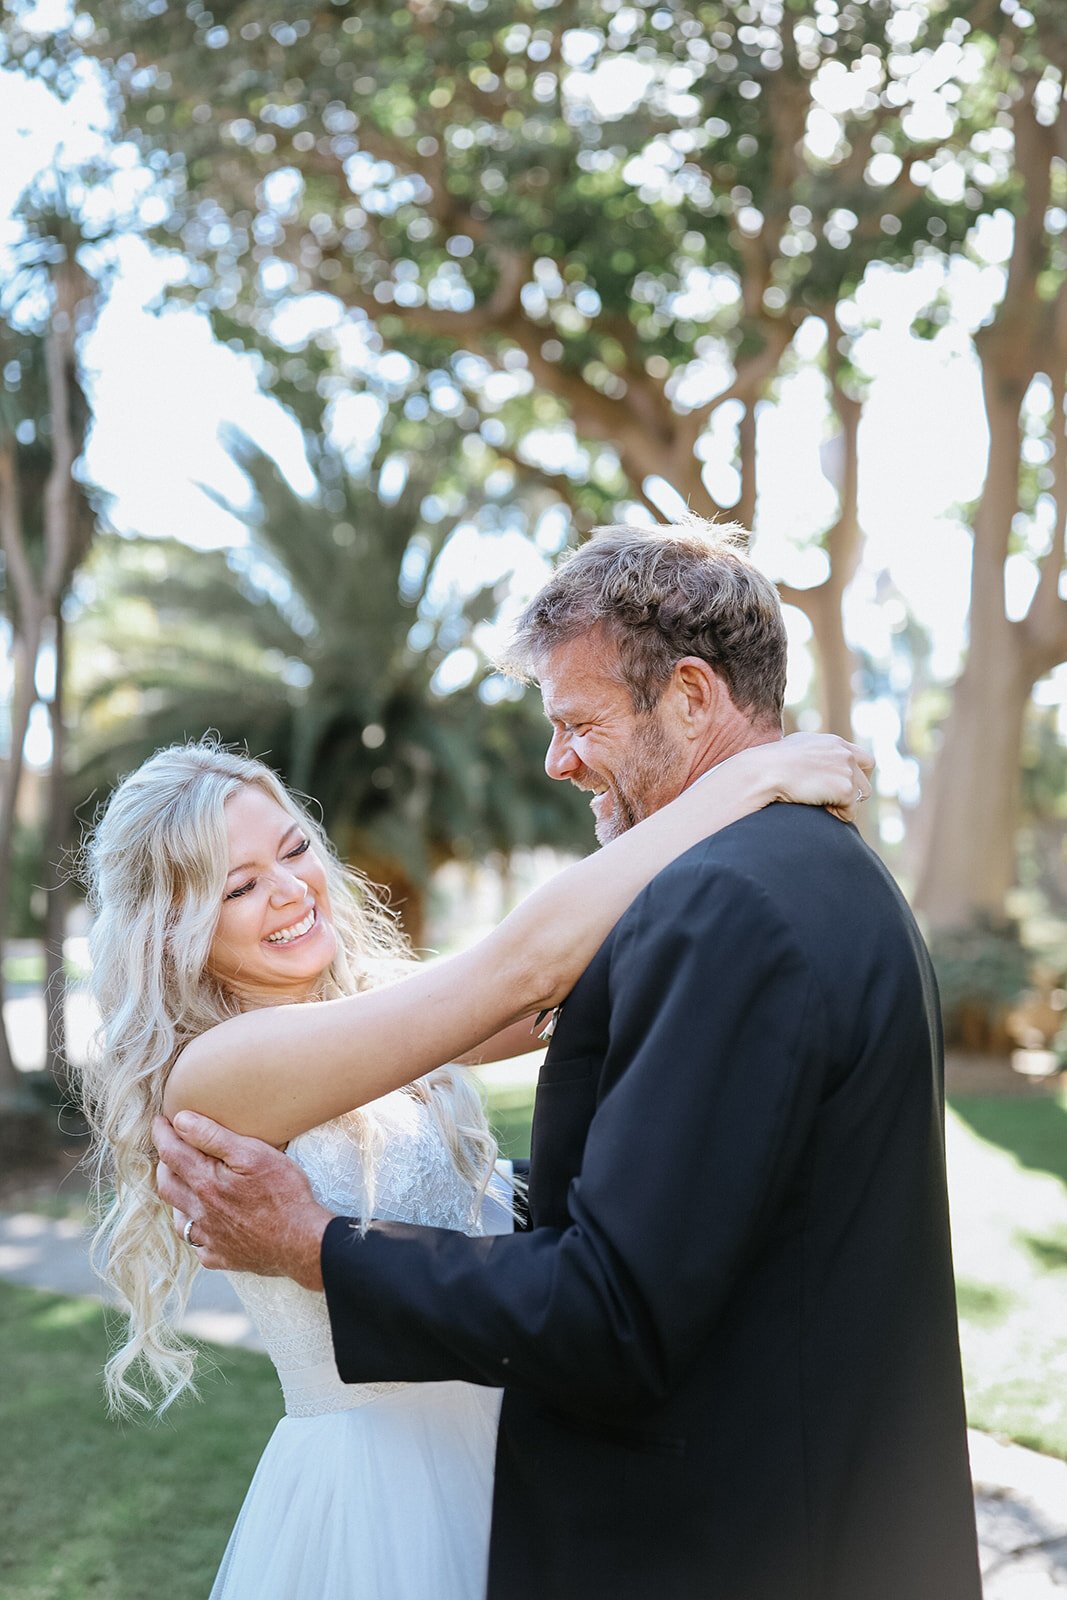 www.santabarbarawedding.com | Santa Barbara Courthouse | Blink Aesthetics | Santa Barbara Classic Weddings | The Dress Bride | Alexis Ireland Florals | Couple Embrace After Ceremony